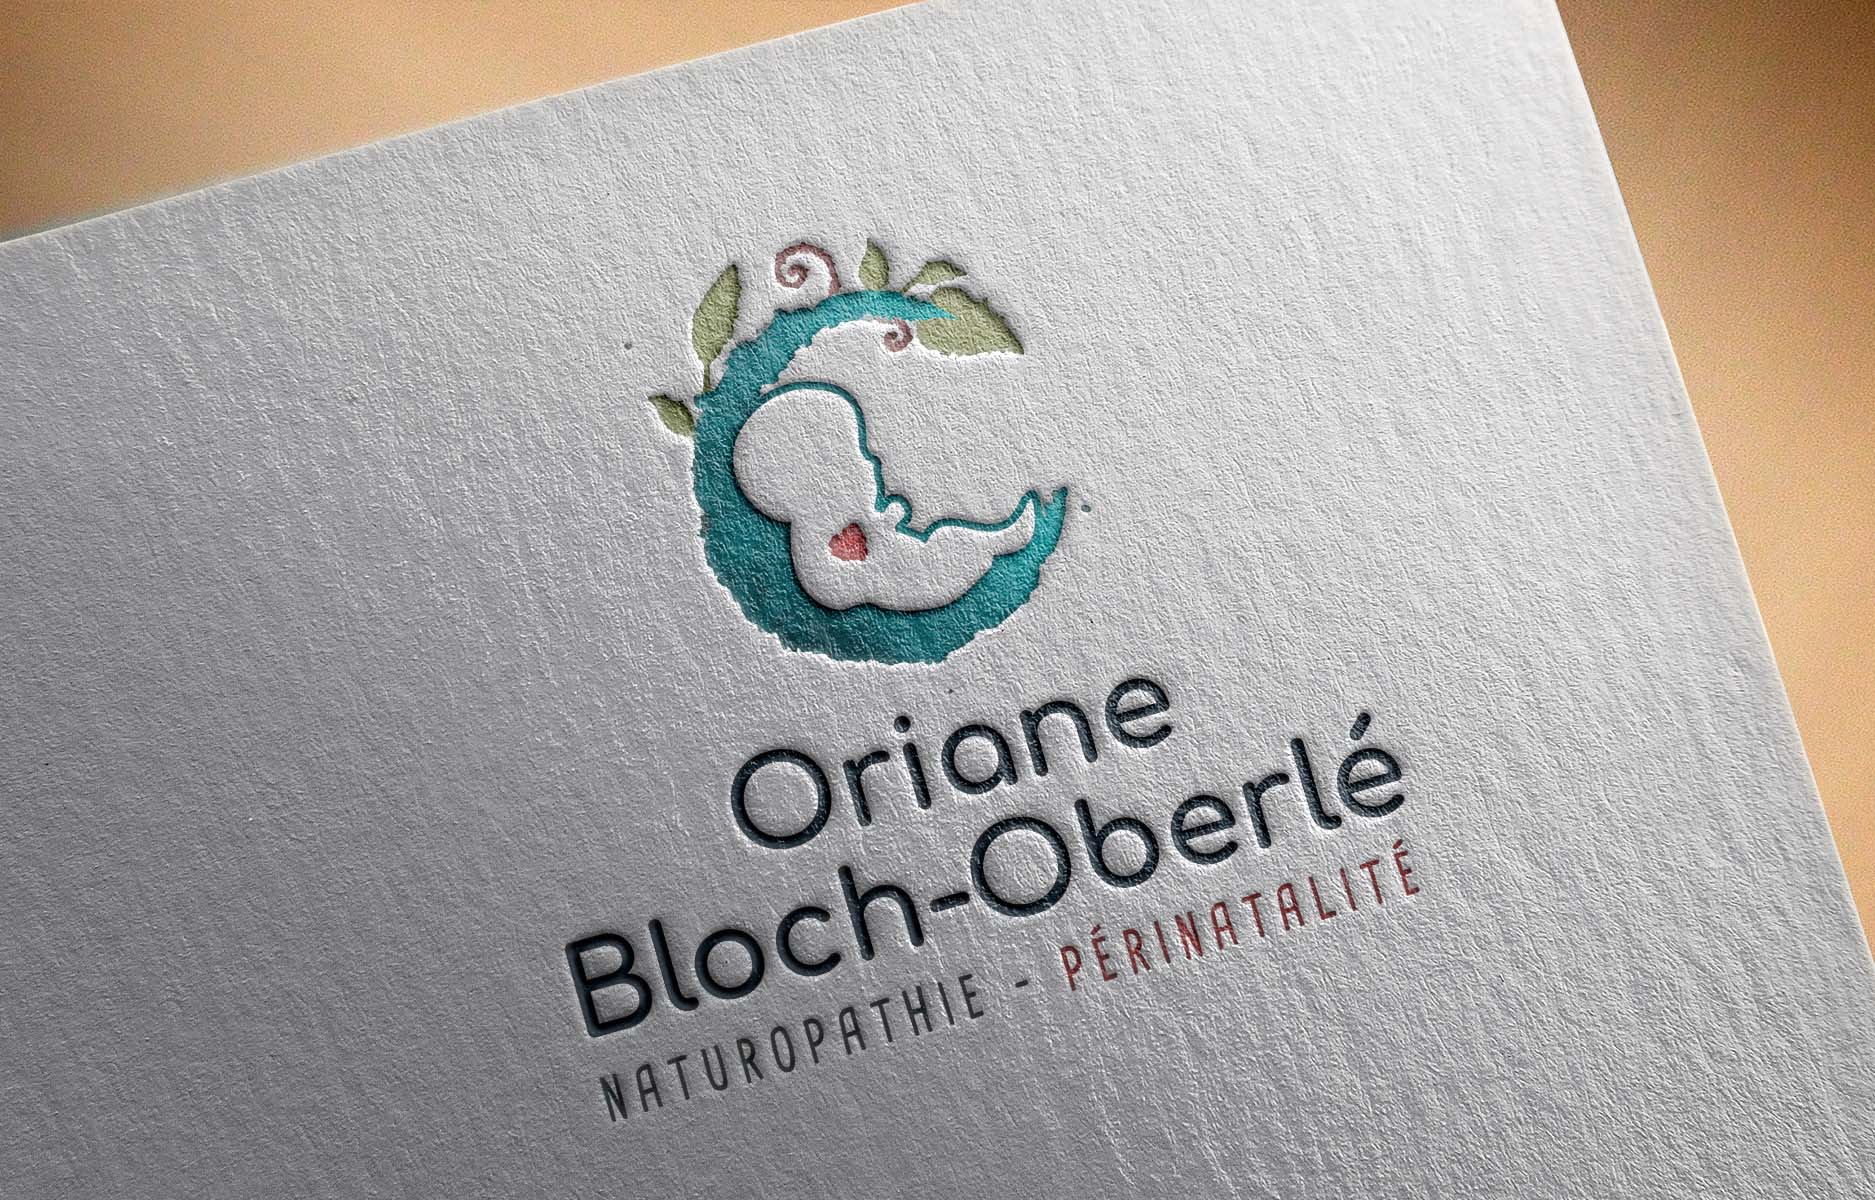 Oriane Naturopathe logo